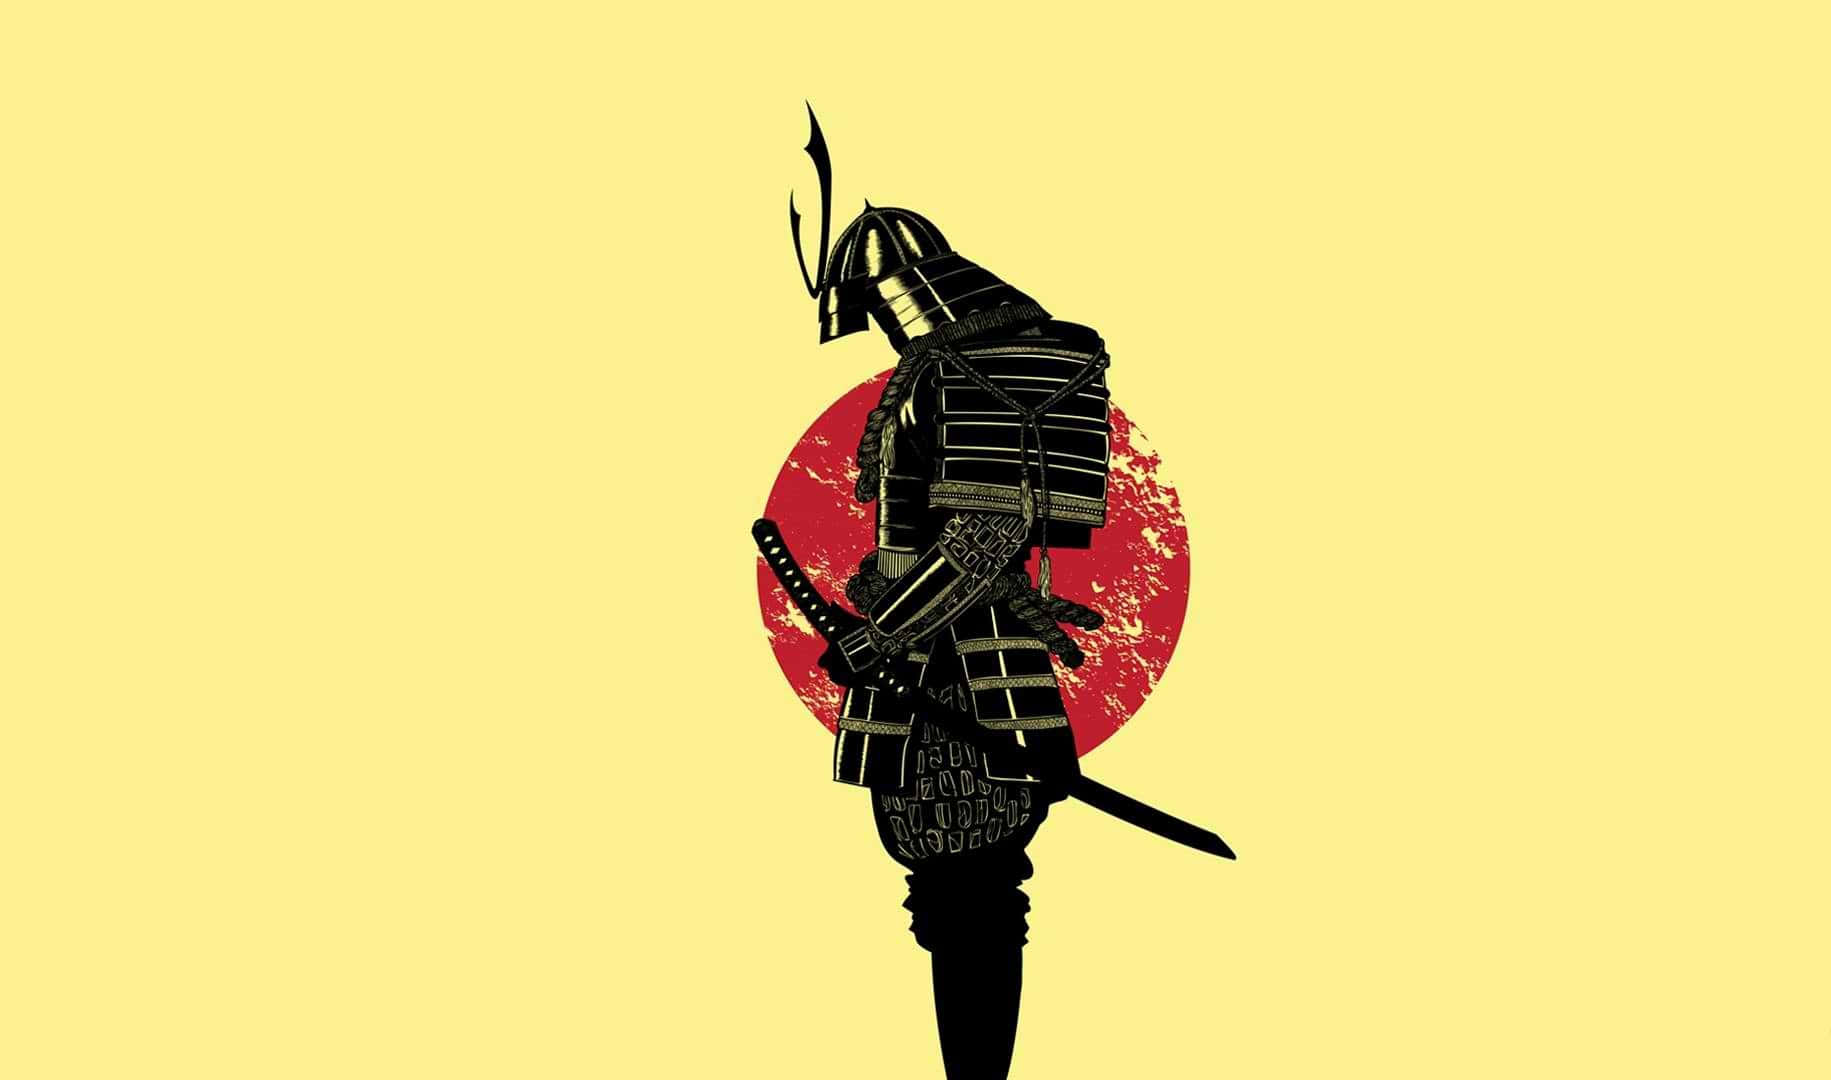 Samurai warrior on horseback – Shogun Wallpaper